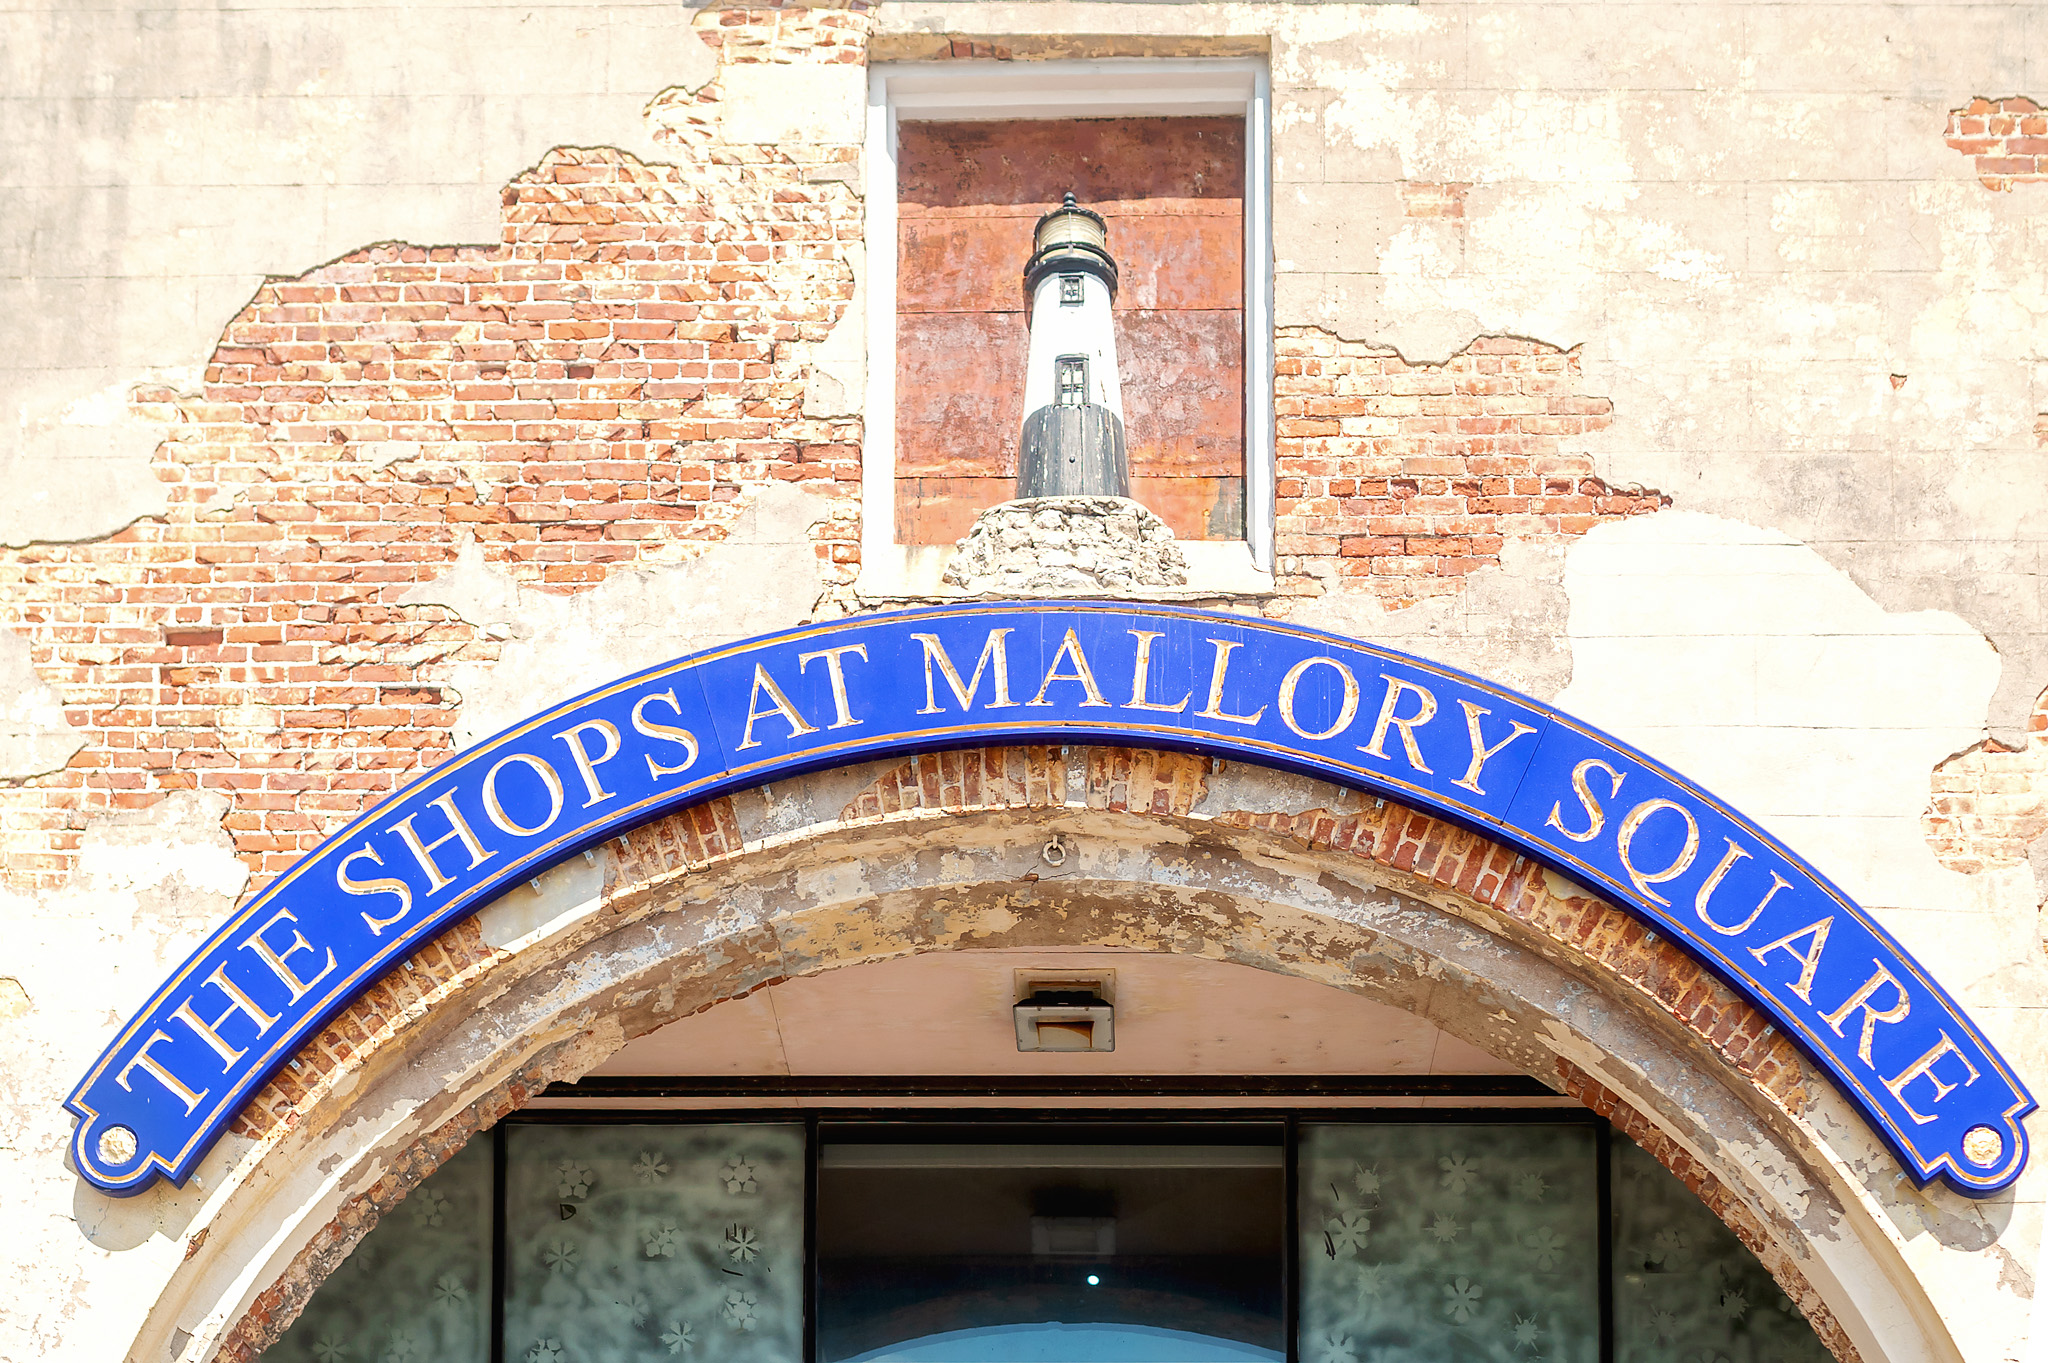 shops at mallory square